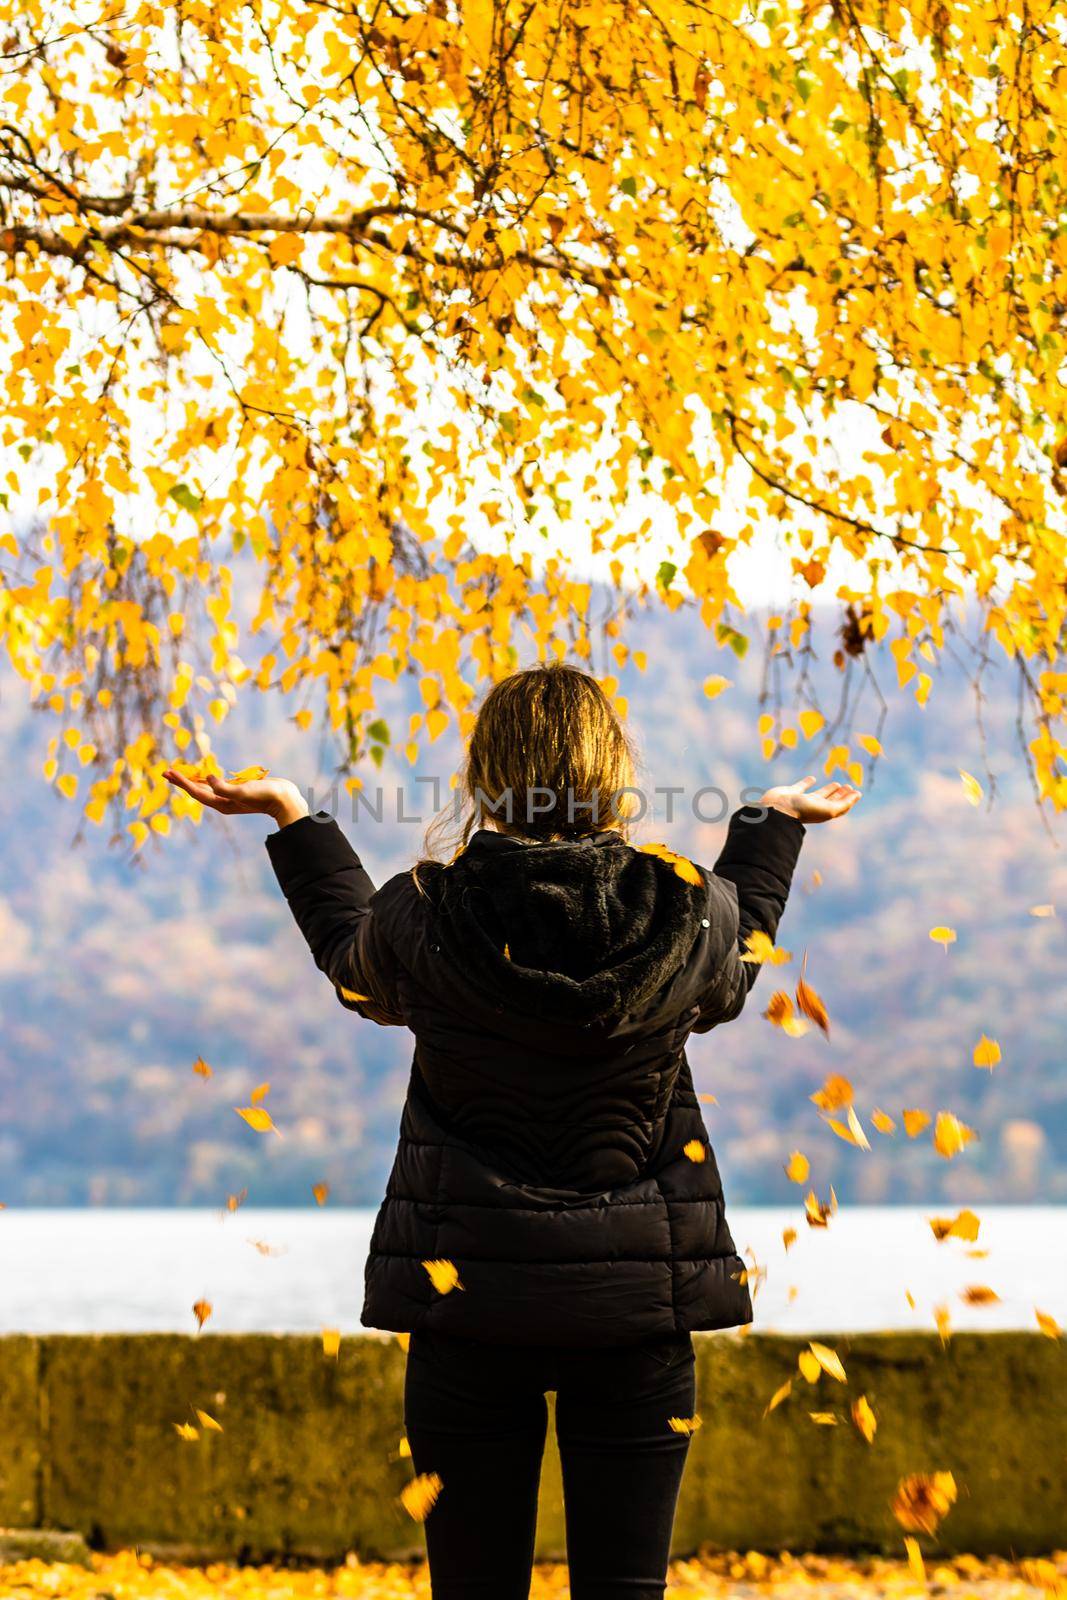 Back view of alone woman enjoying autumn, throwing fallen leaves on autumn alley. Autumn landscape, orange foliage in a park in Orsova, Romania, 2020 by vladispas